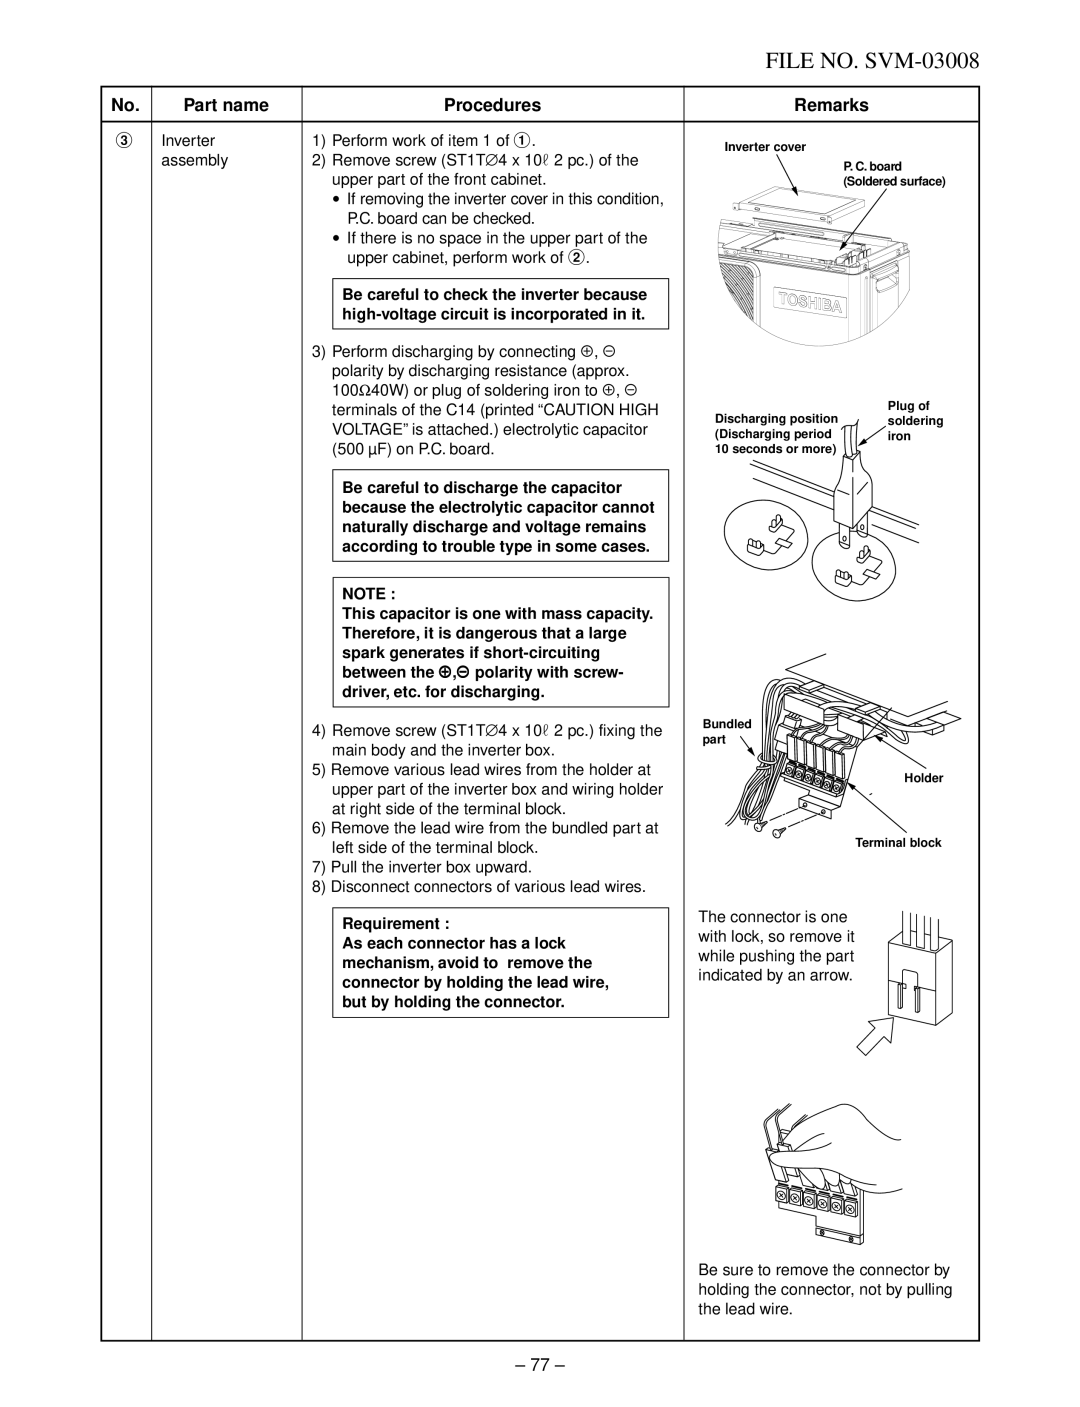 Toshiba RAS-13UAV-E2, RAS-13UKV-E2 service manual Requirement Connector is one 